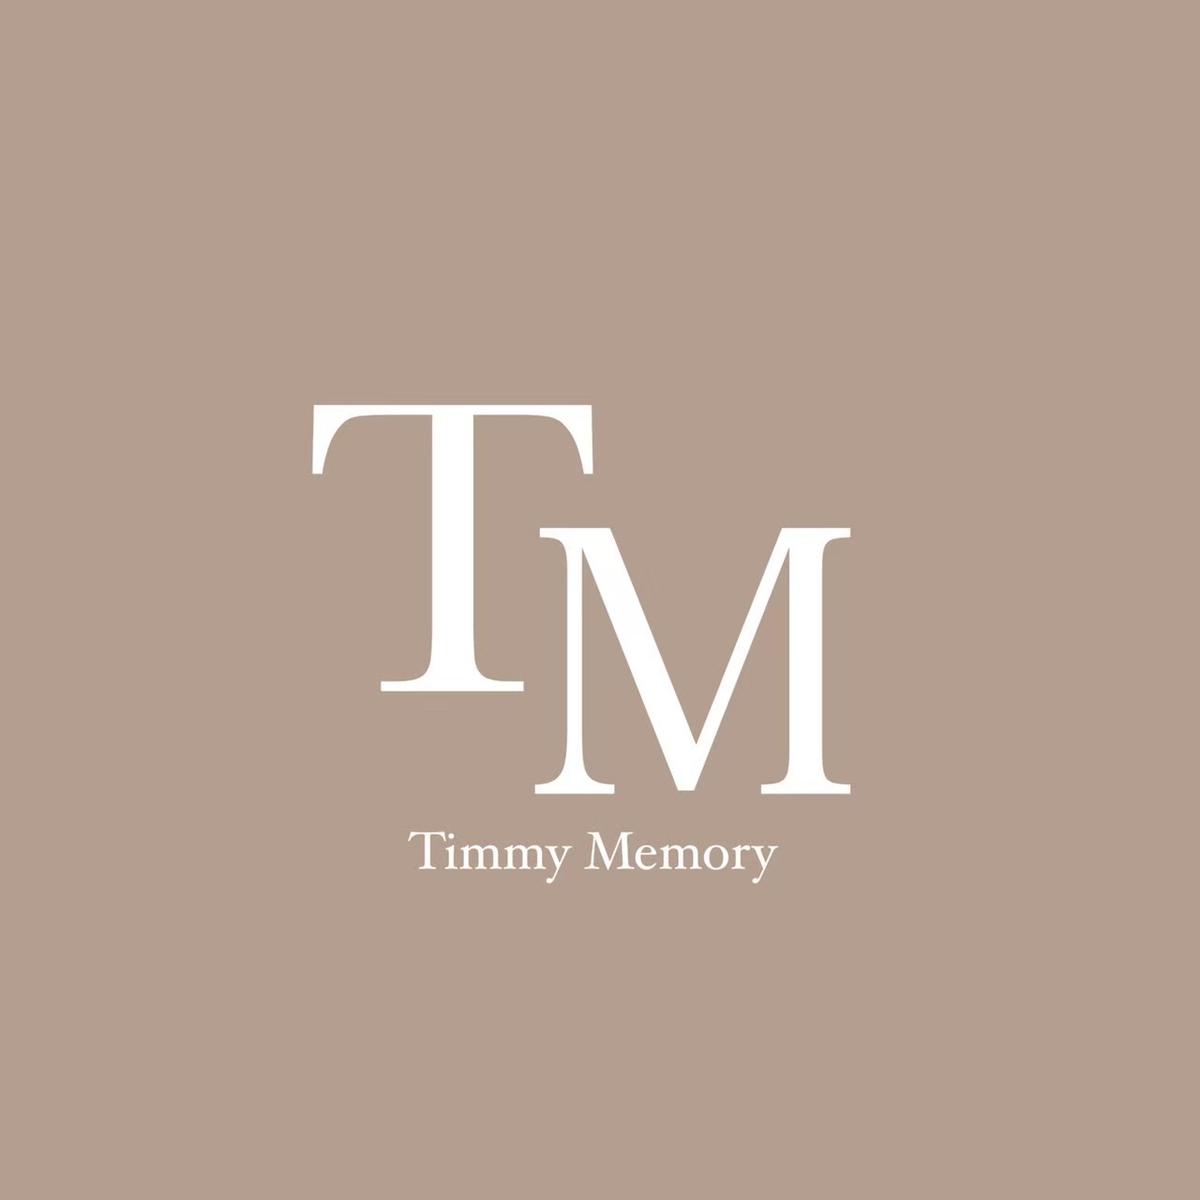 Timmy Memoryの画像